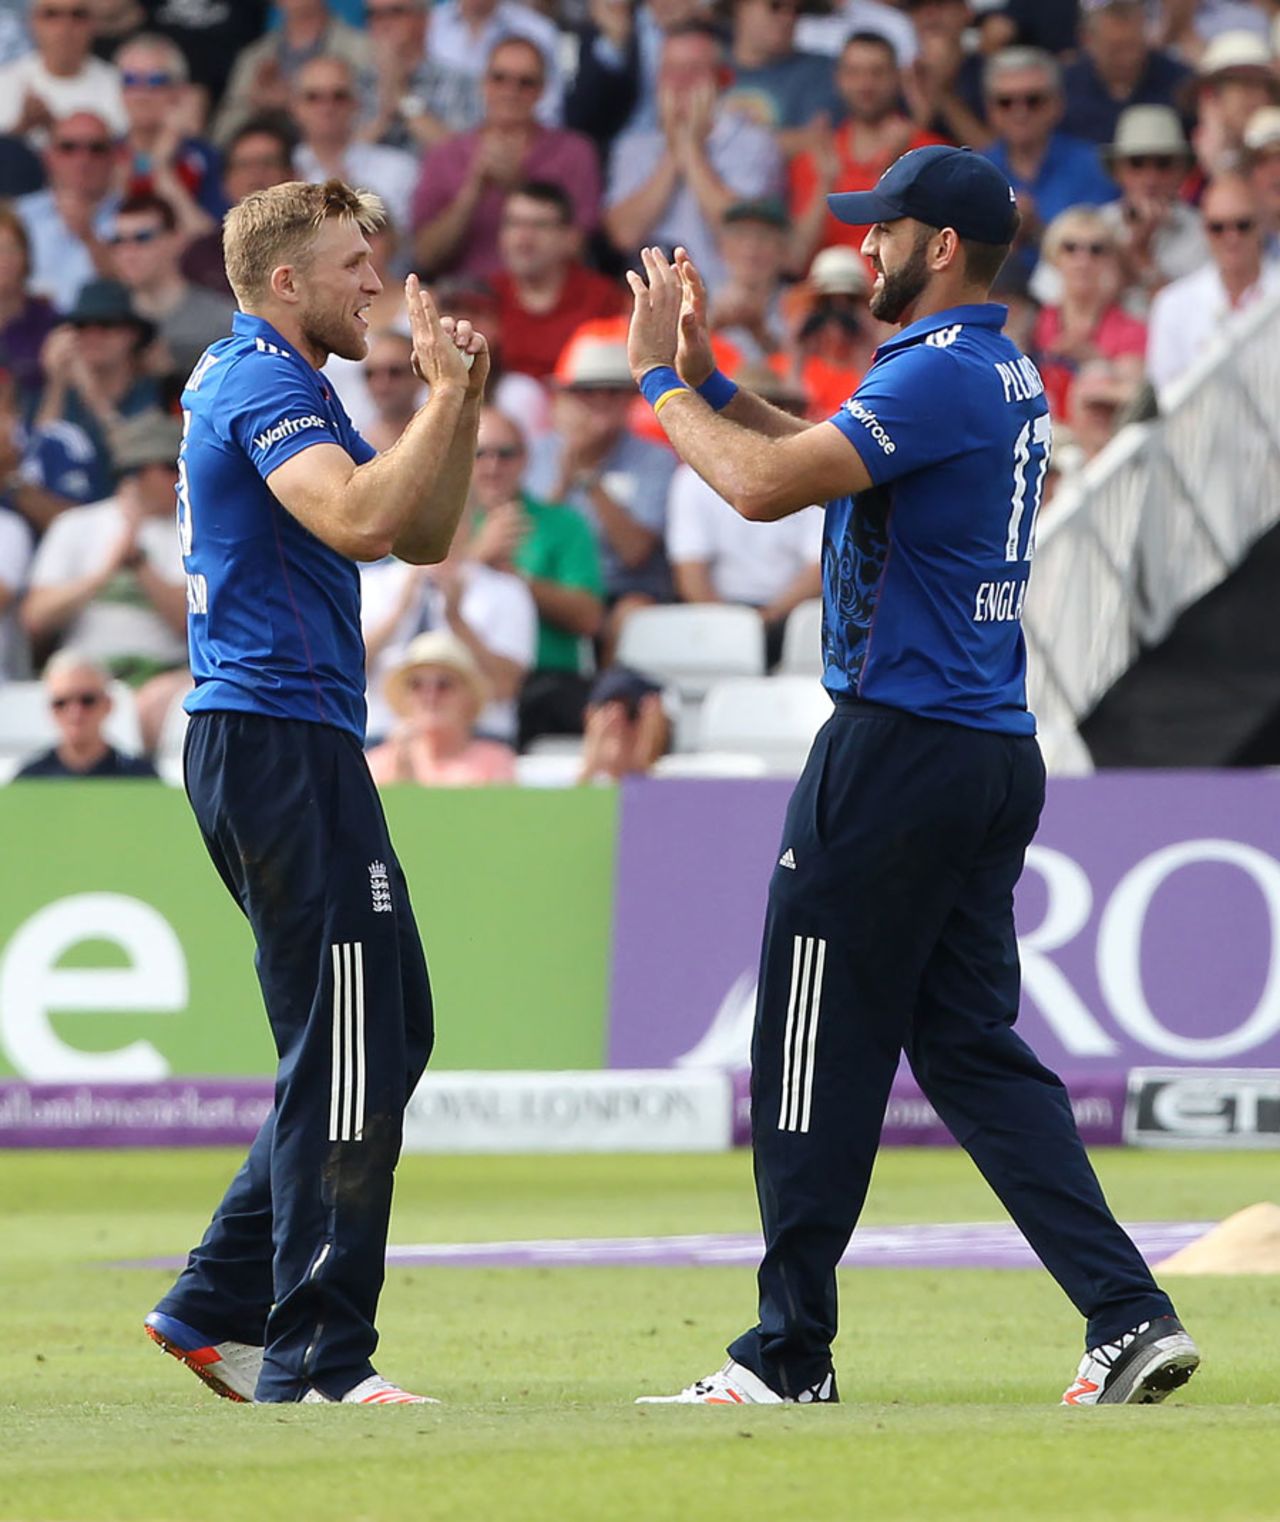 David Willey and Liam Plunkett combined for a run-out, England v Sri Lanka, 1st ODI, Trent Bridge, June 21, 2016